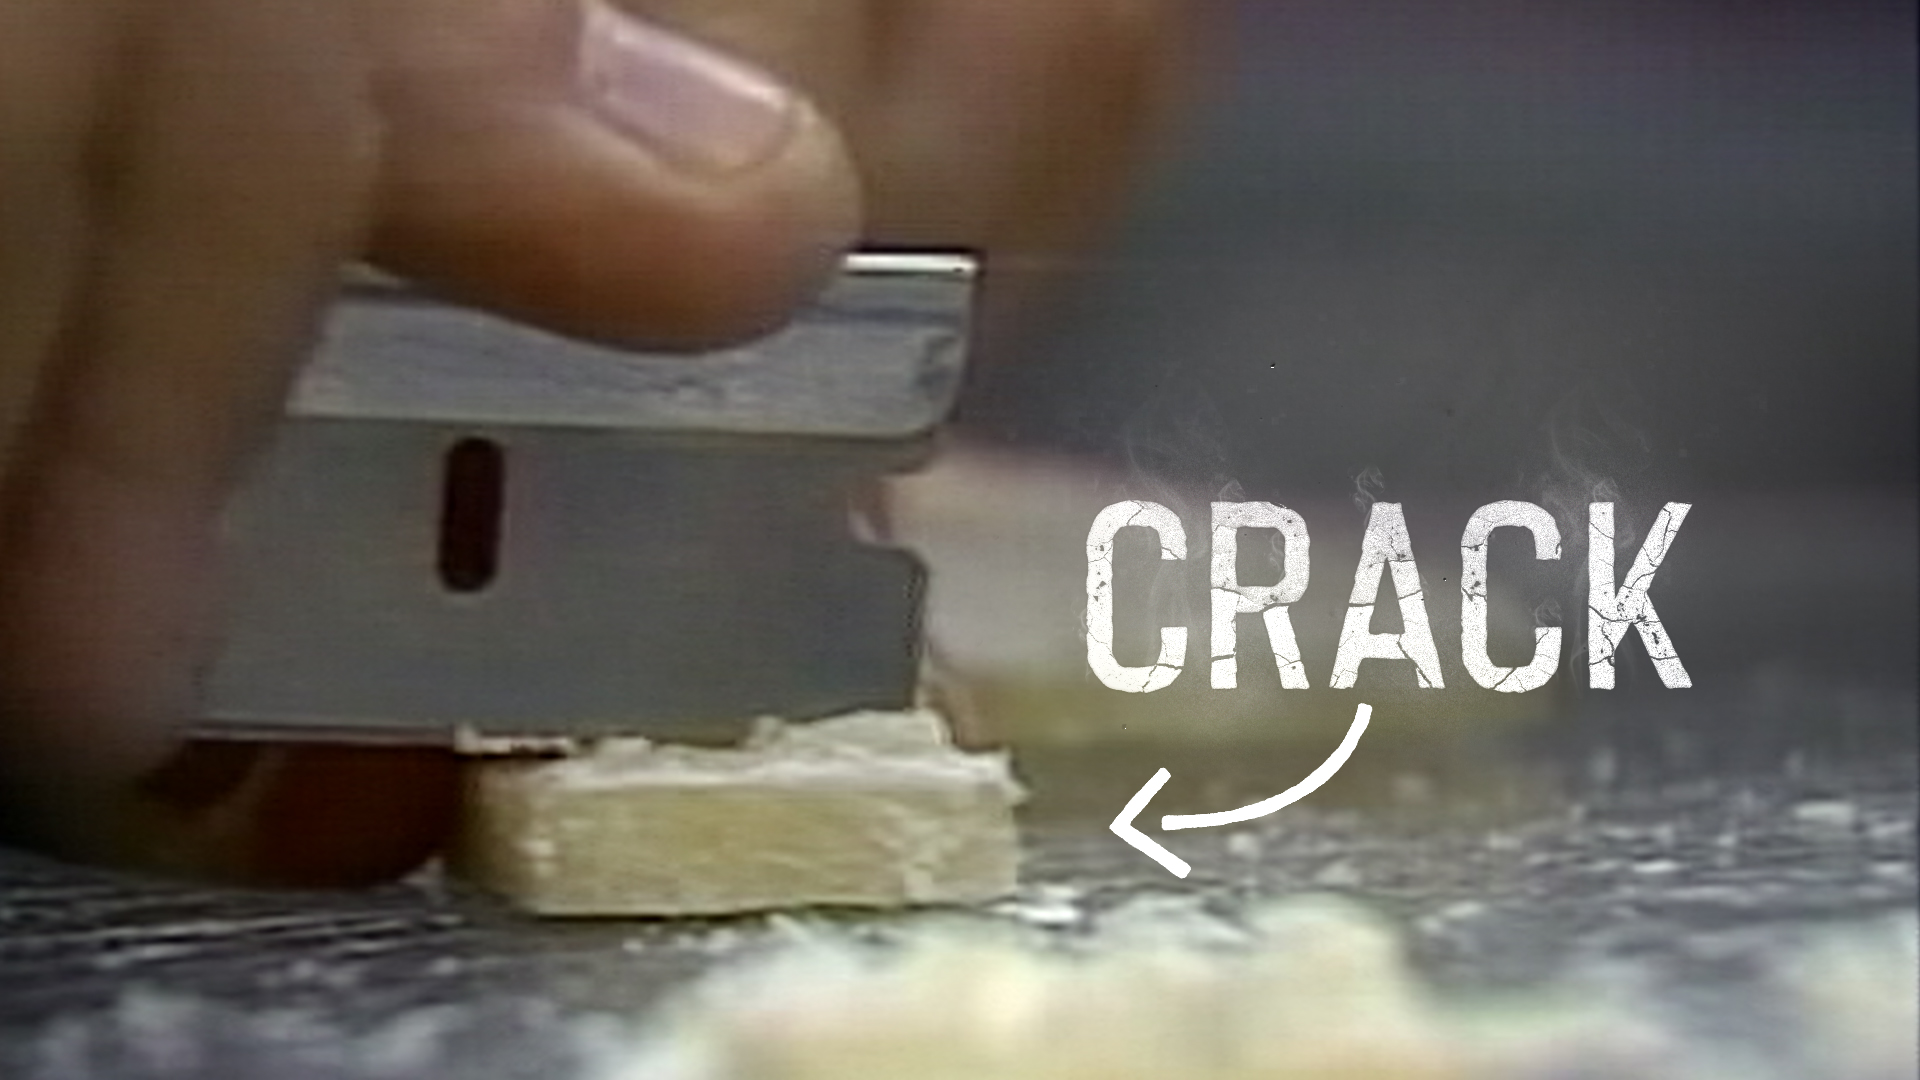 Crack: Kokain, Korruption und Konspiration Crack: Cocaine, Corruption & Conspiracy